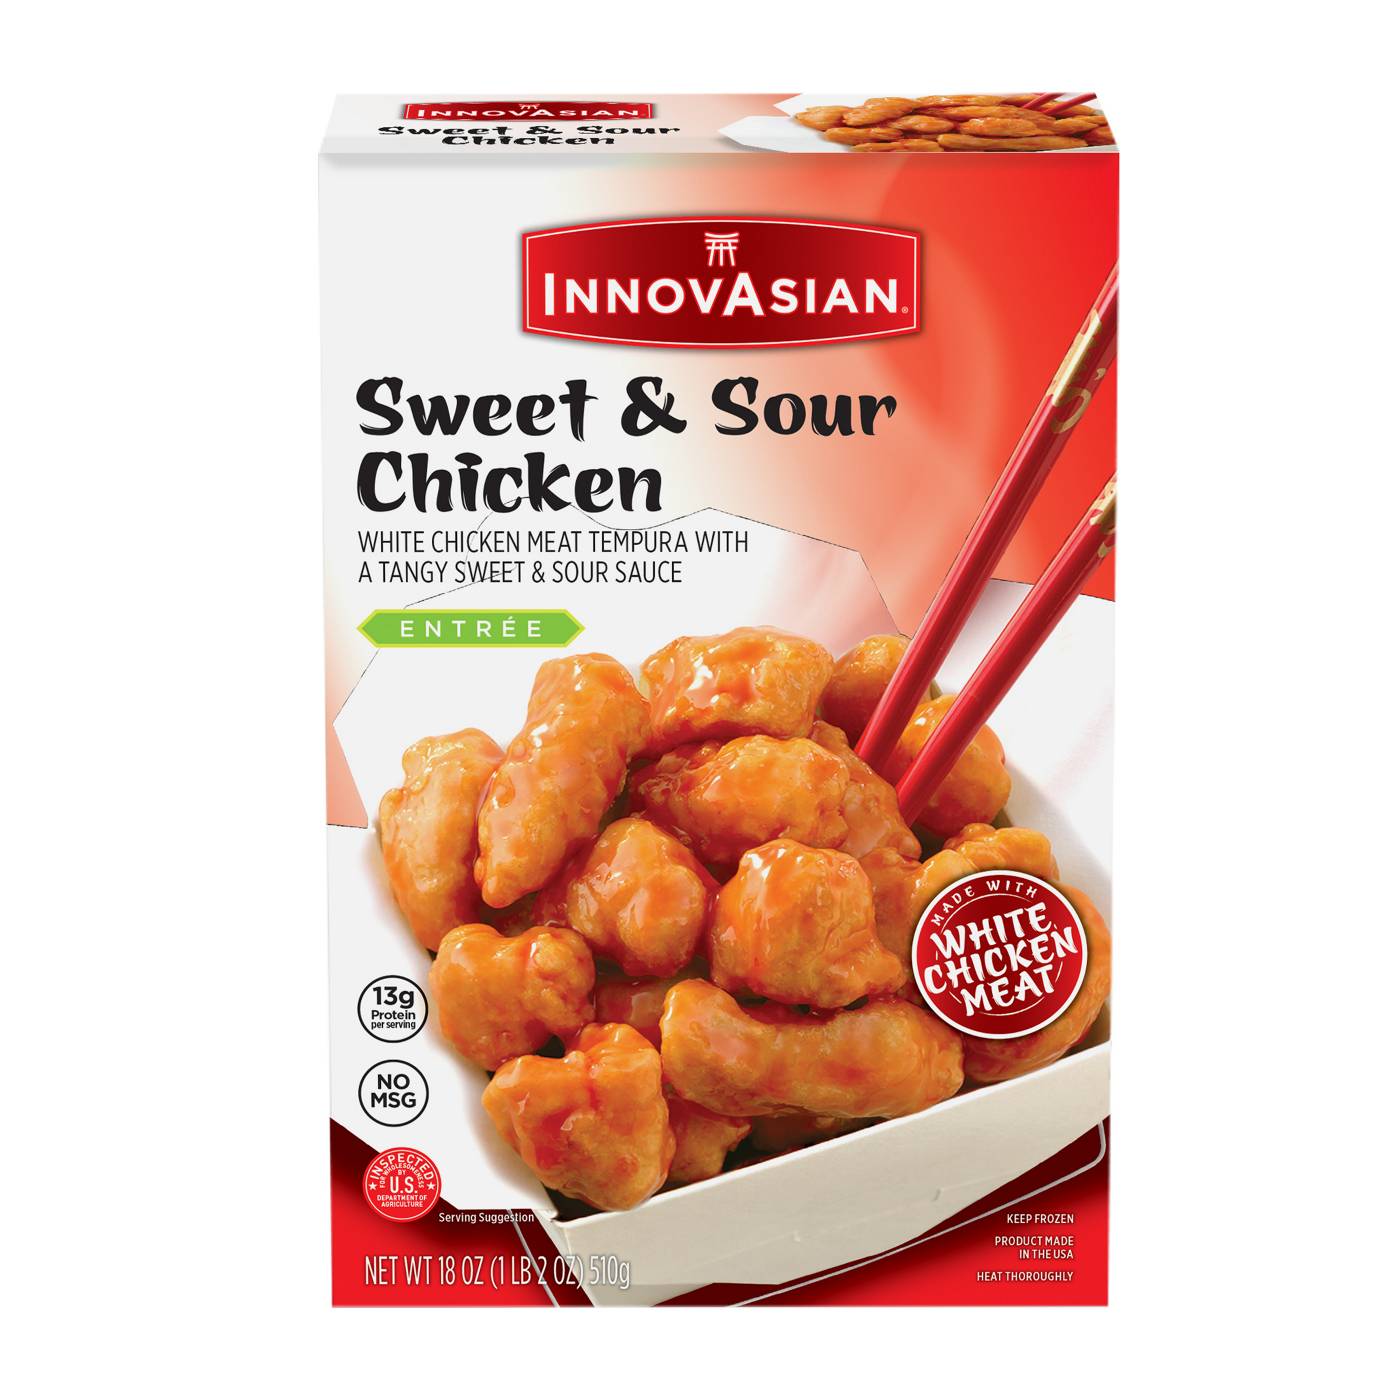 InnovAsian Frozen Sweet & Sour Chicken; image 1 of 8